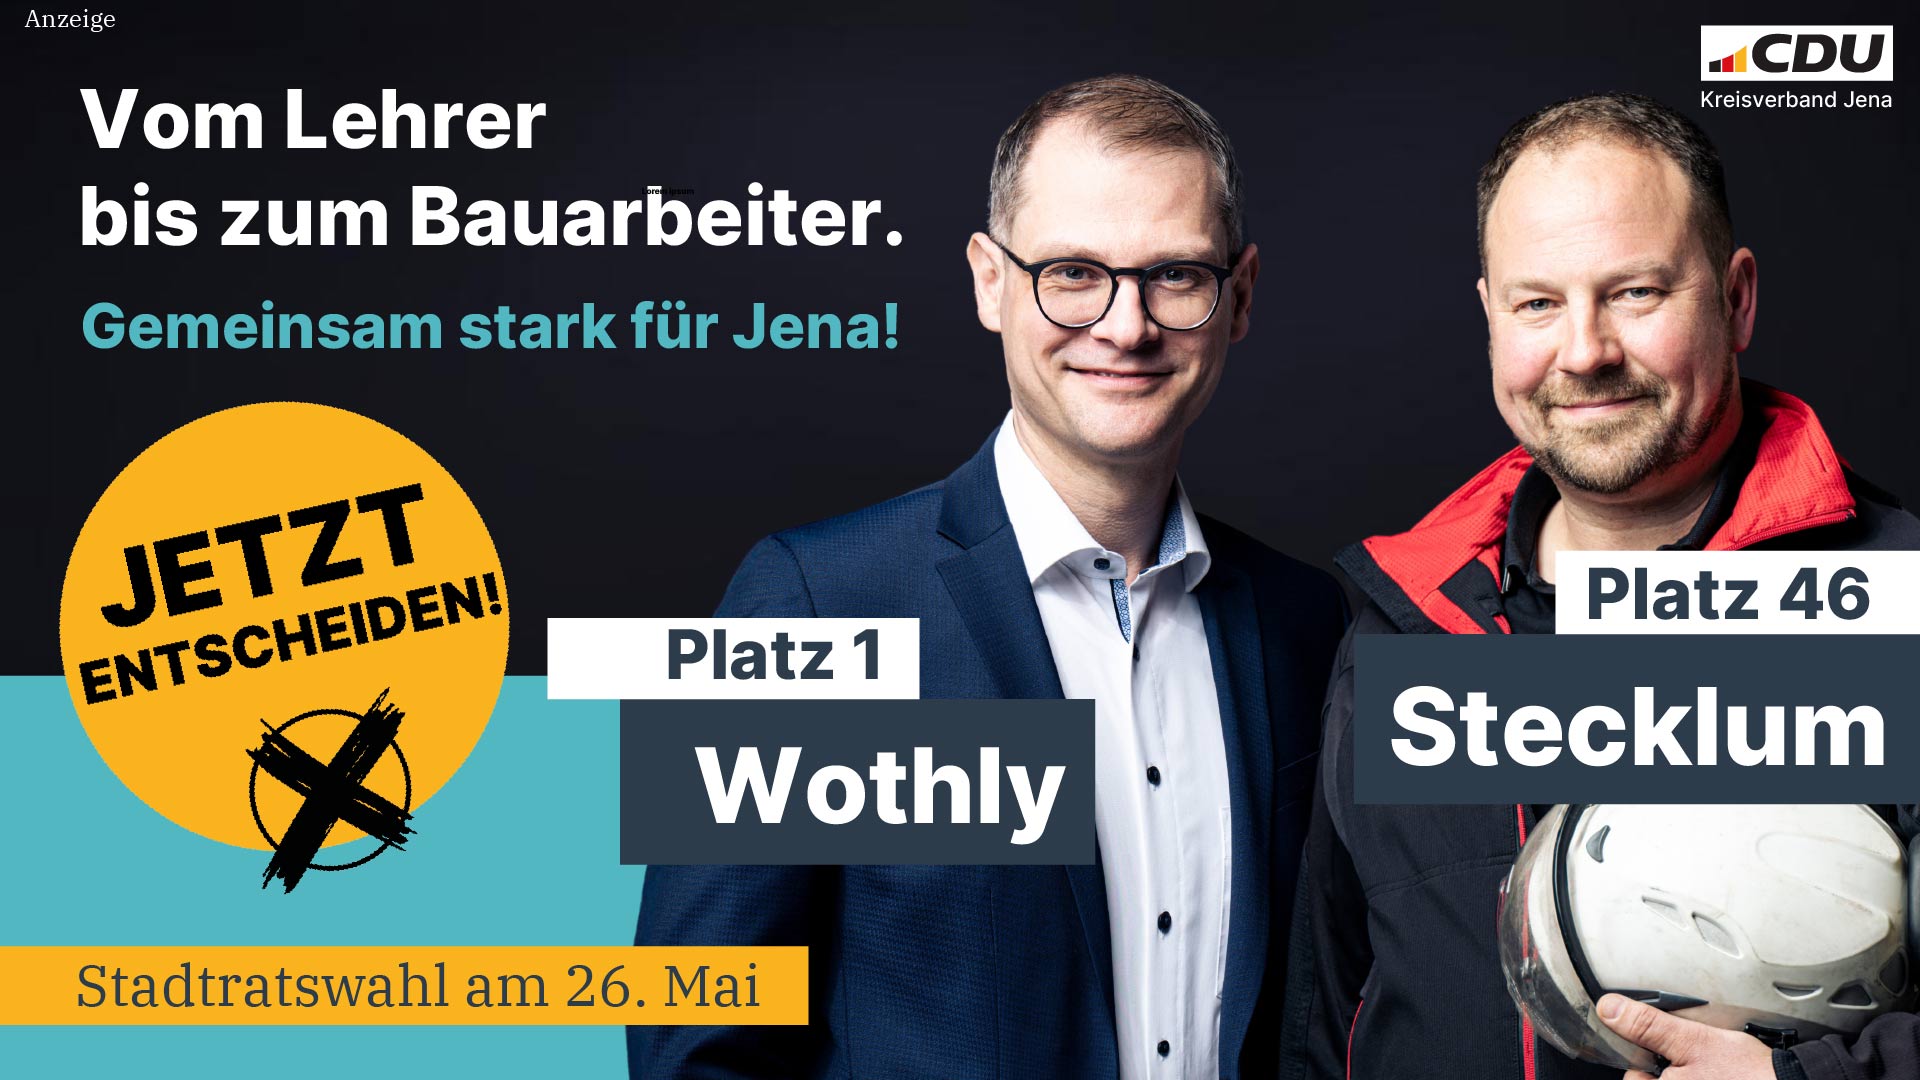 CDU Jena_Wahlwerbung_Wothly_Stecklum